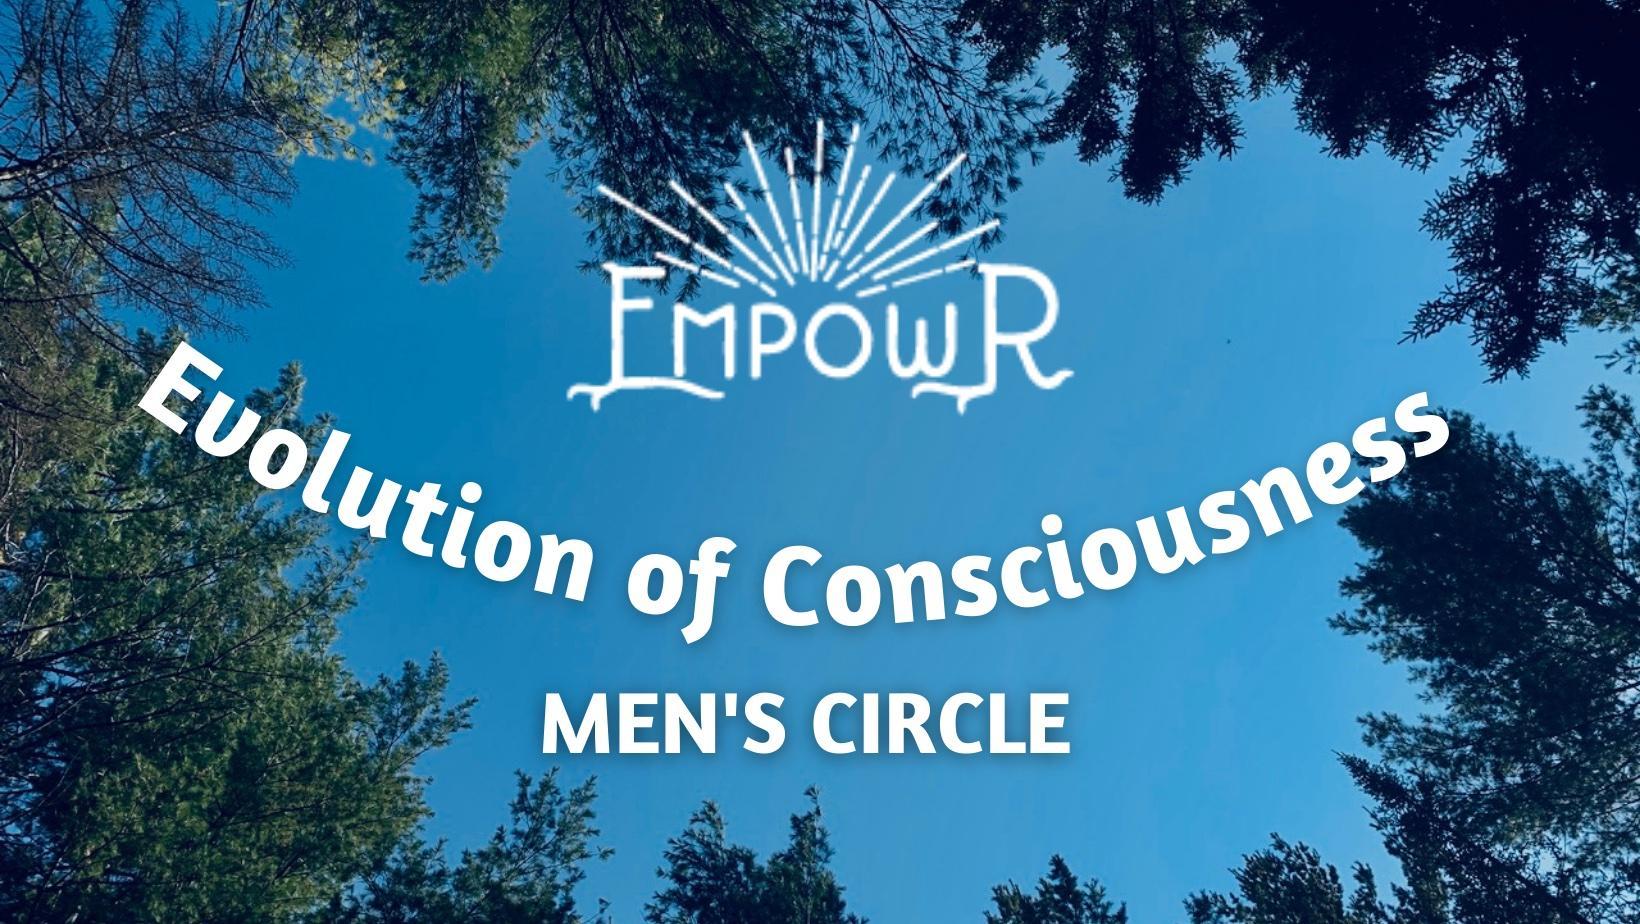 EmpowR Mens Circle